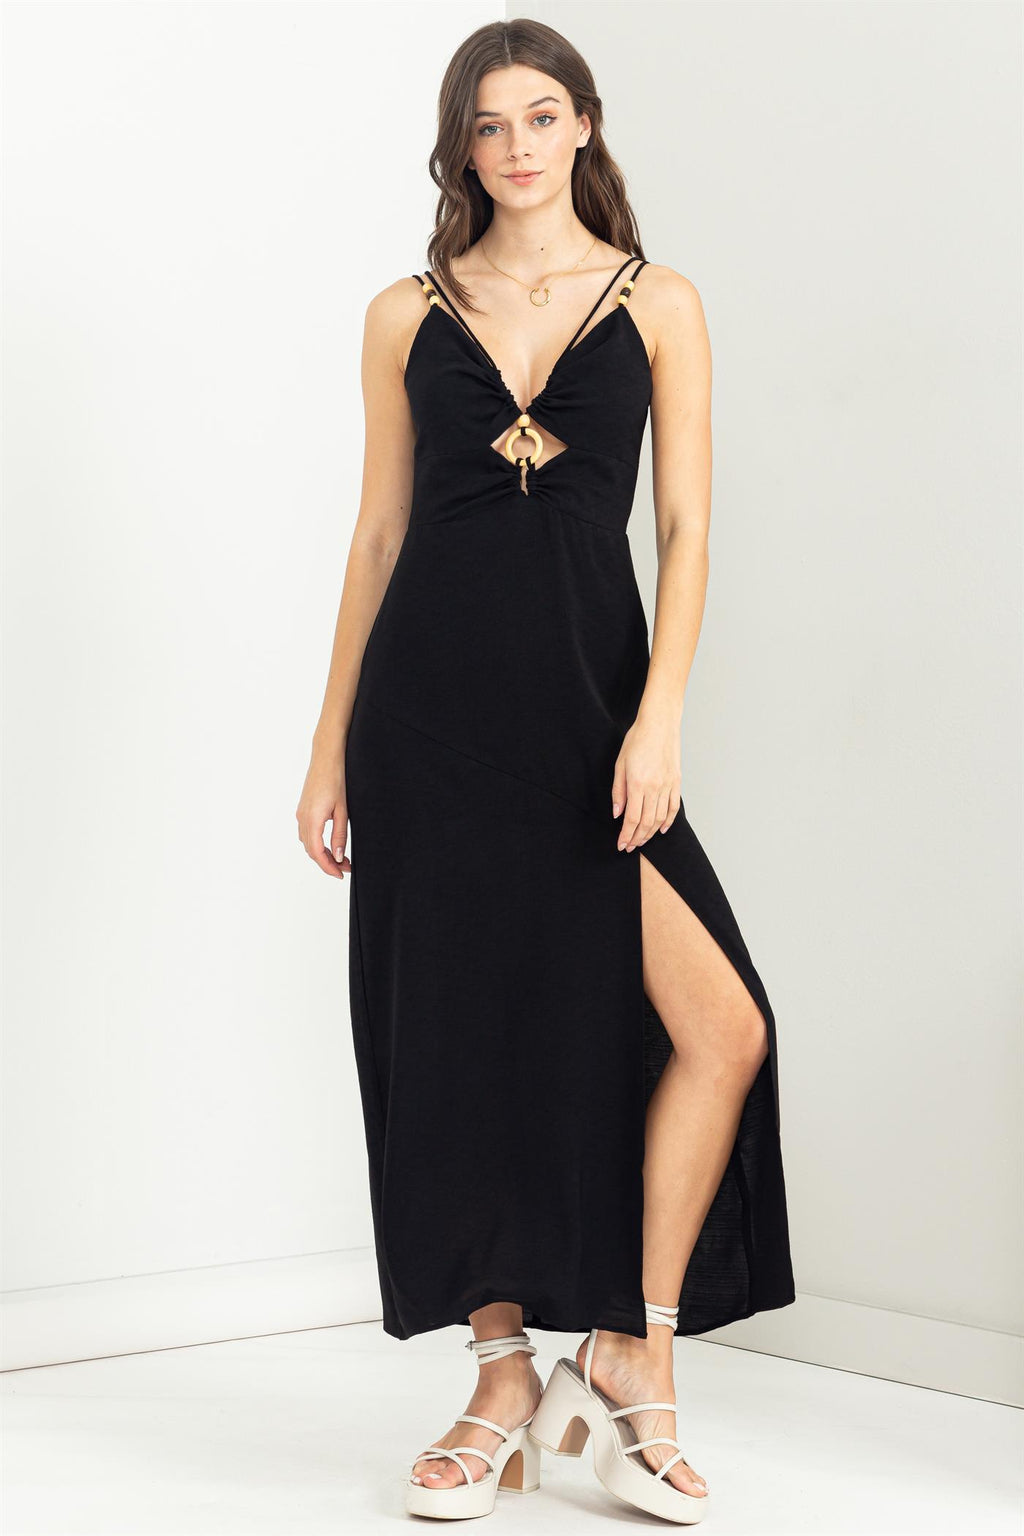 Flirty Side Slit Dress - Artemisia Clothing Shop